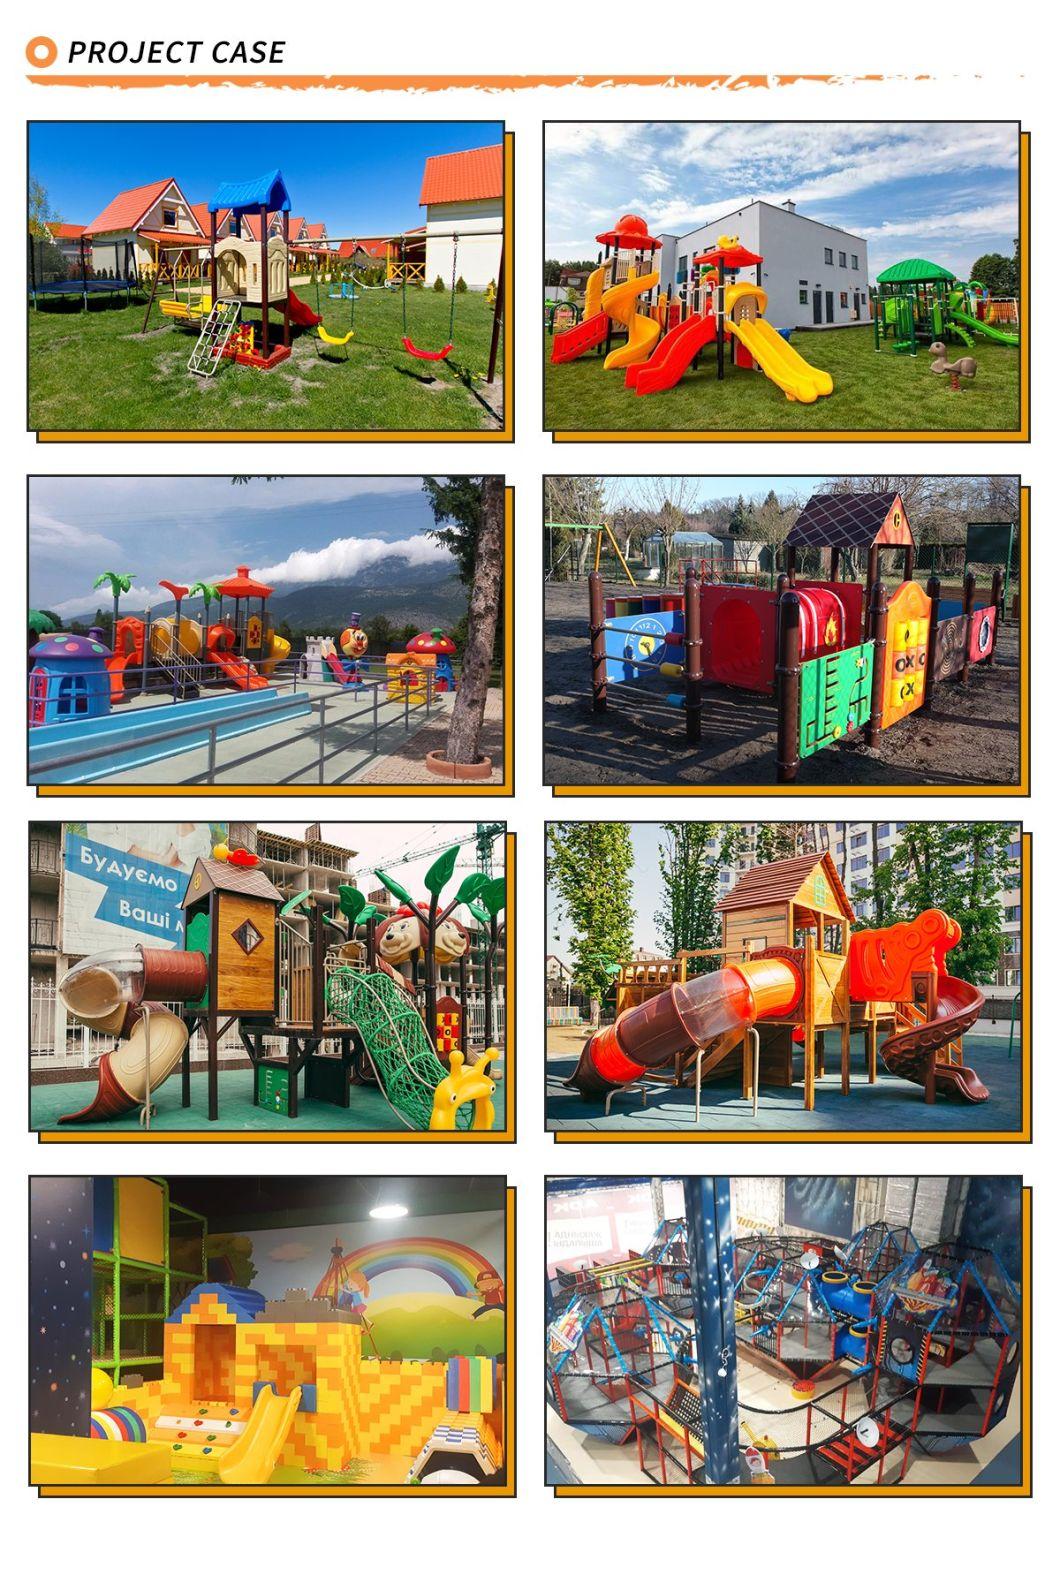 Outdoor Playground Slide New Design Equipment Children Plastic Amusement Equipment with CE/ASTM/TUV/GS Certificates